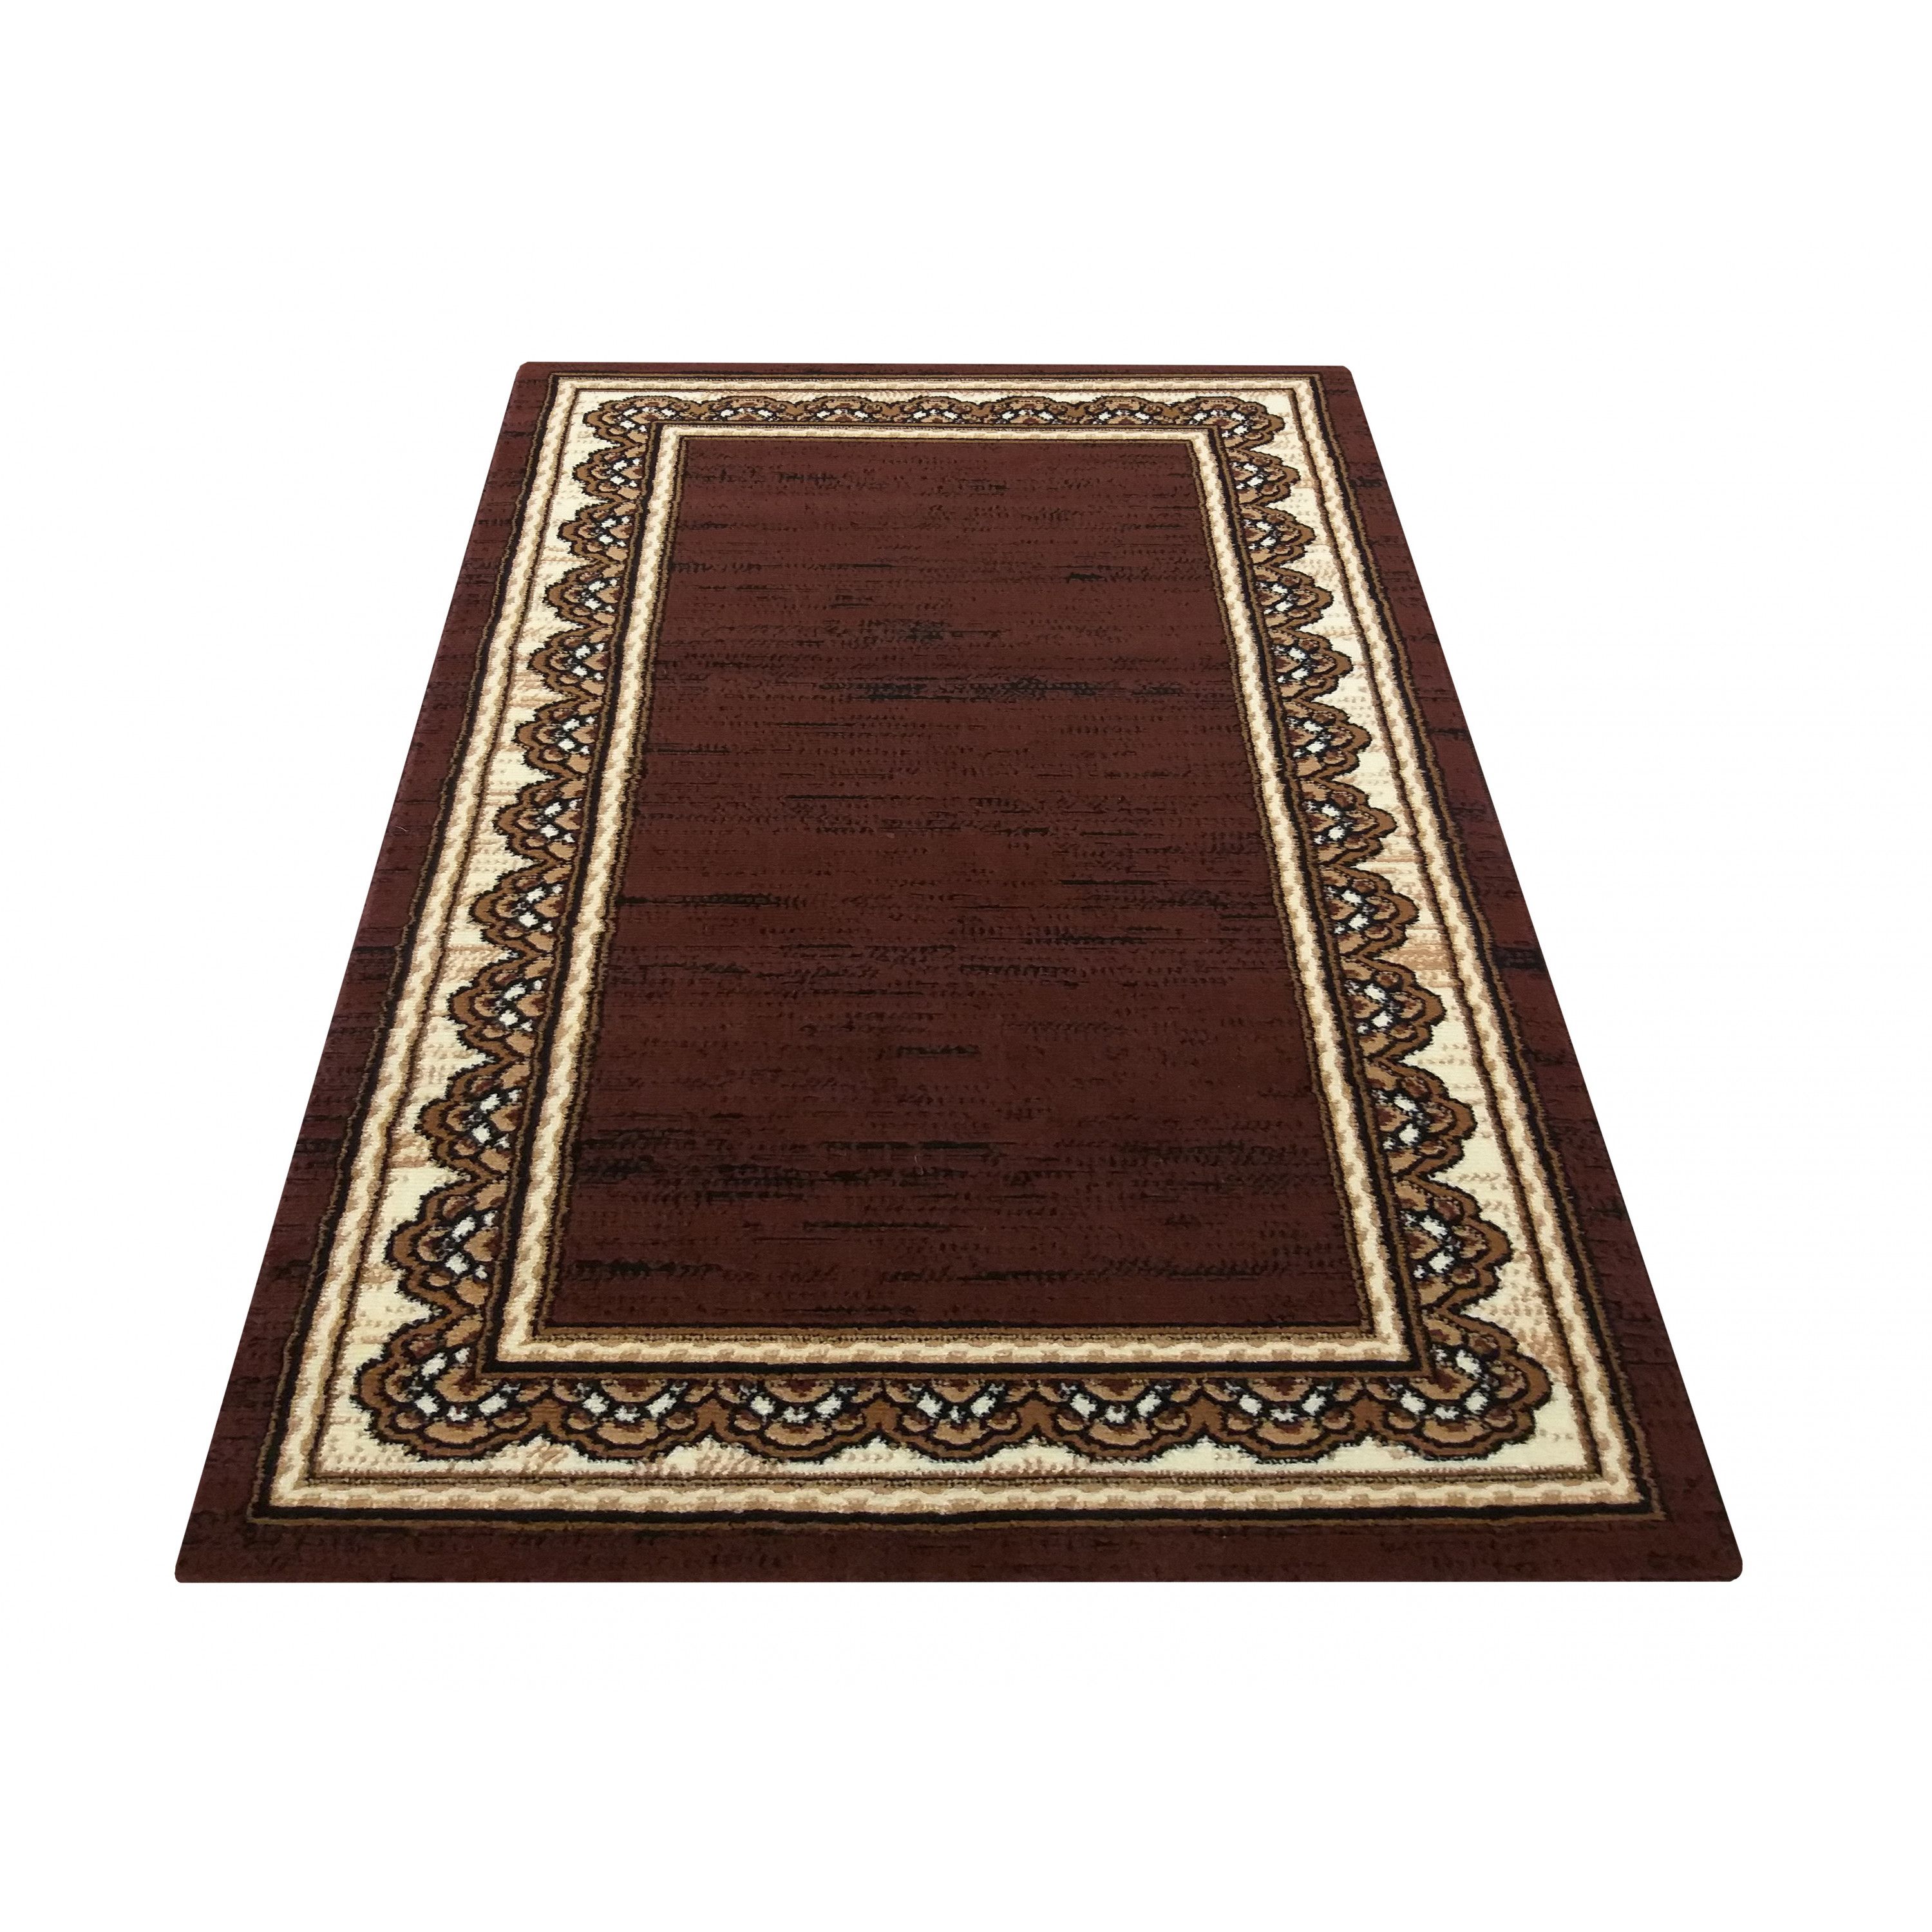 DomTextilu Hnedý elegantný koberec v štýle vintage 21581-158776